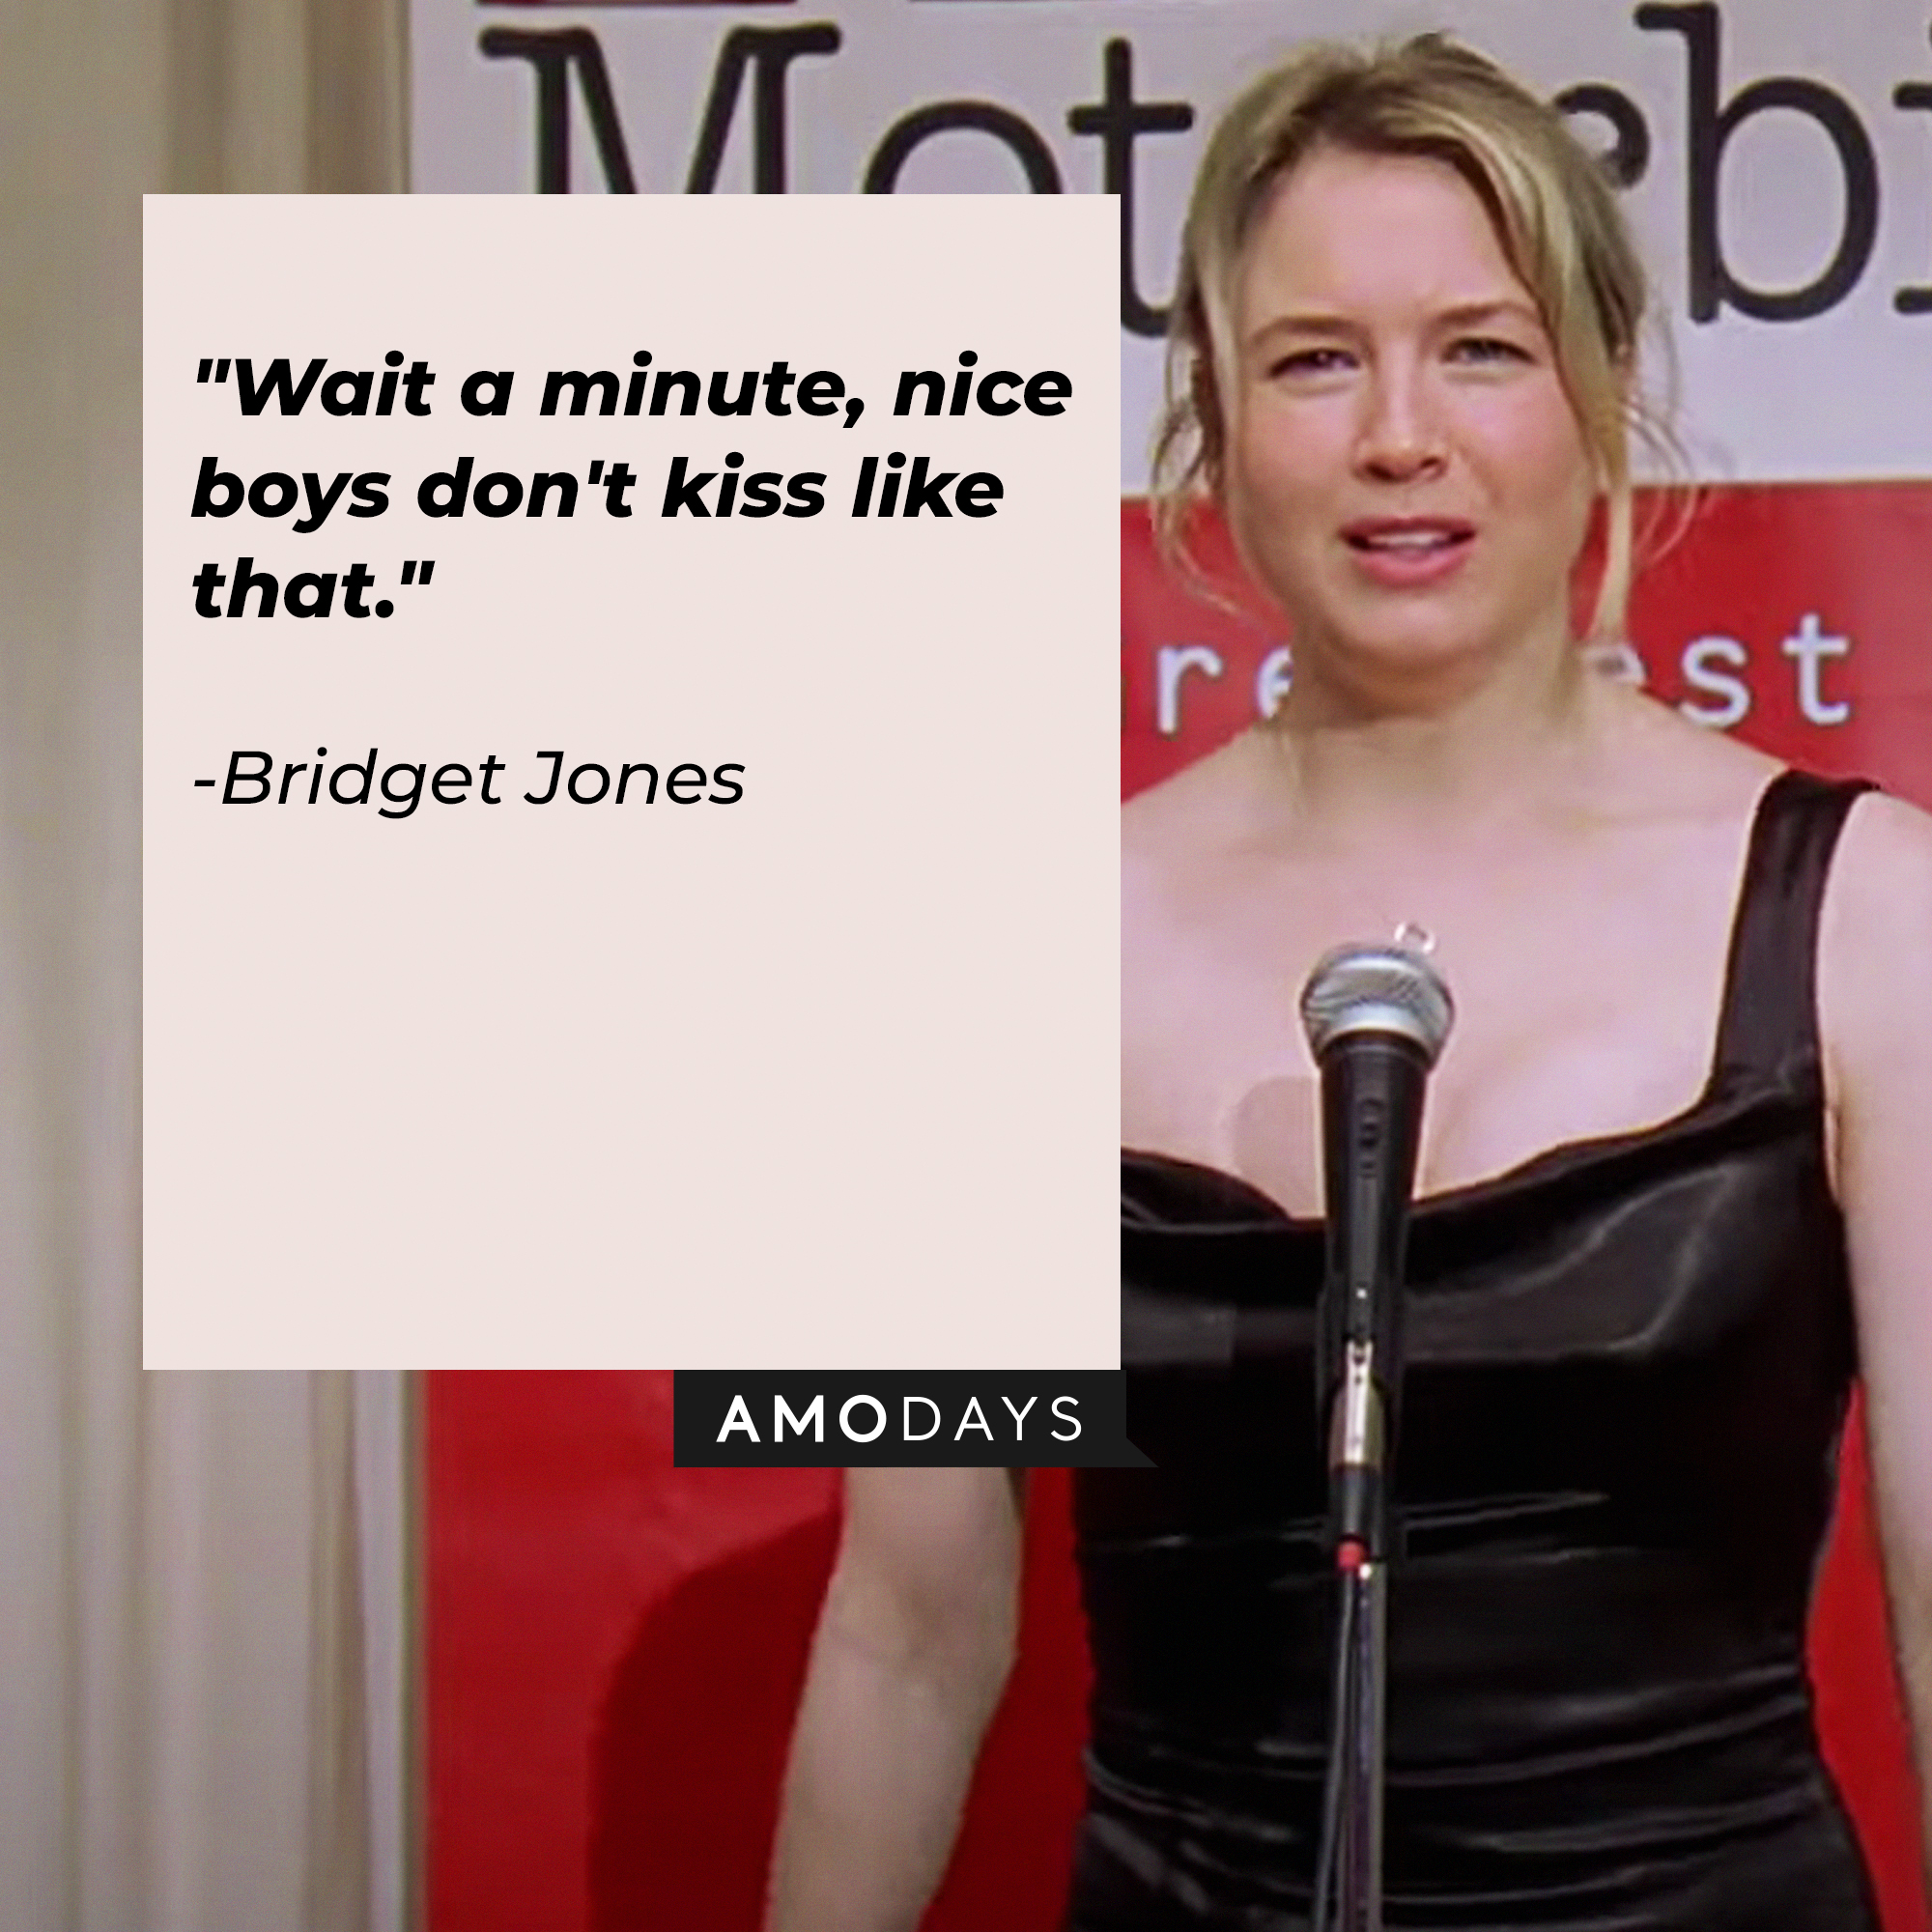 Bridget Jones with her quote in "Bridget Jones's Diary:" "Wait a minute, nice boys don't kiss like that." | Source: Facebook/BridgetJonessDiary